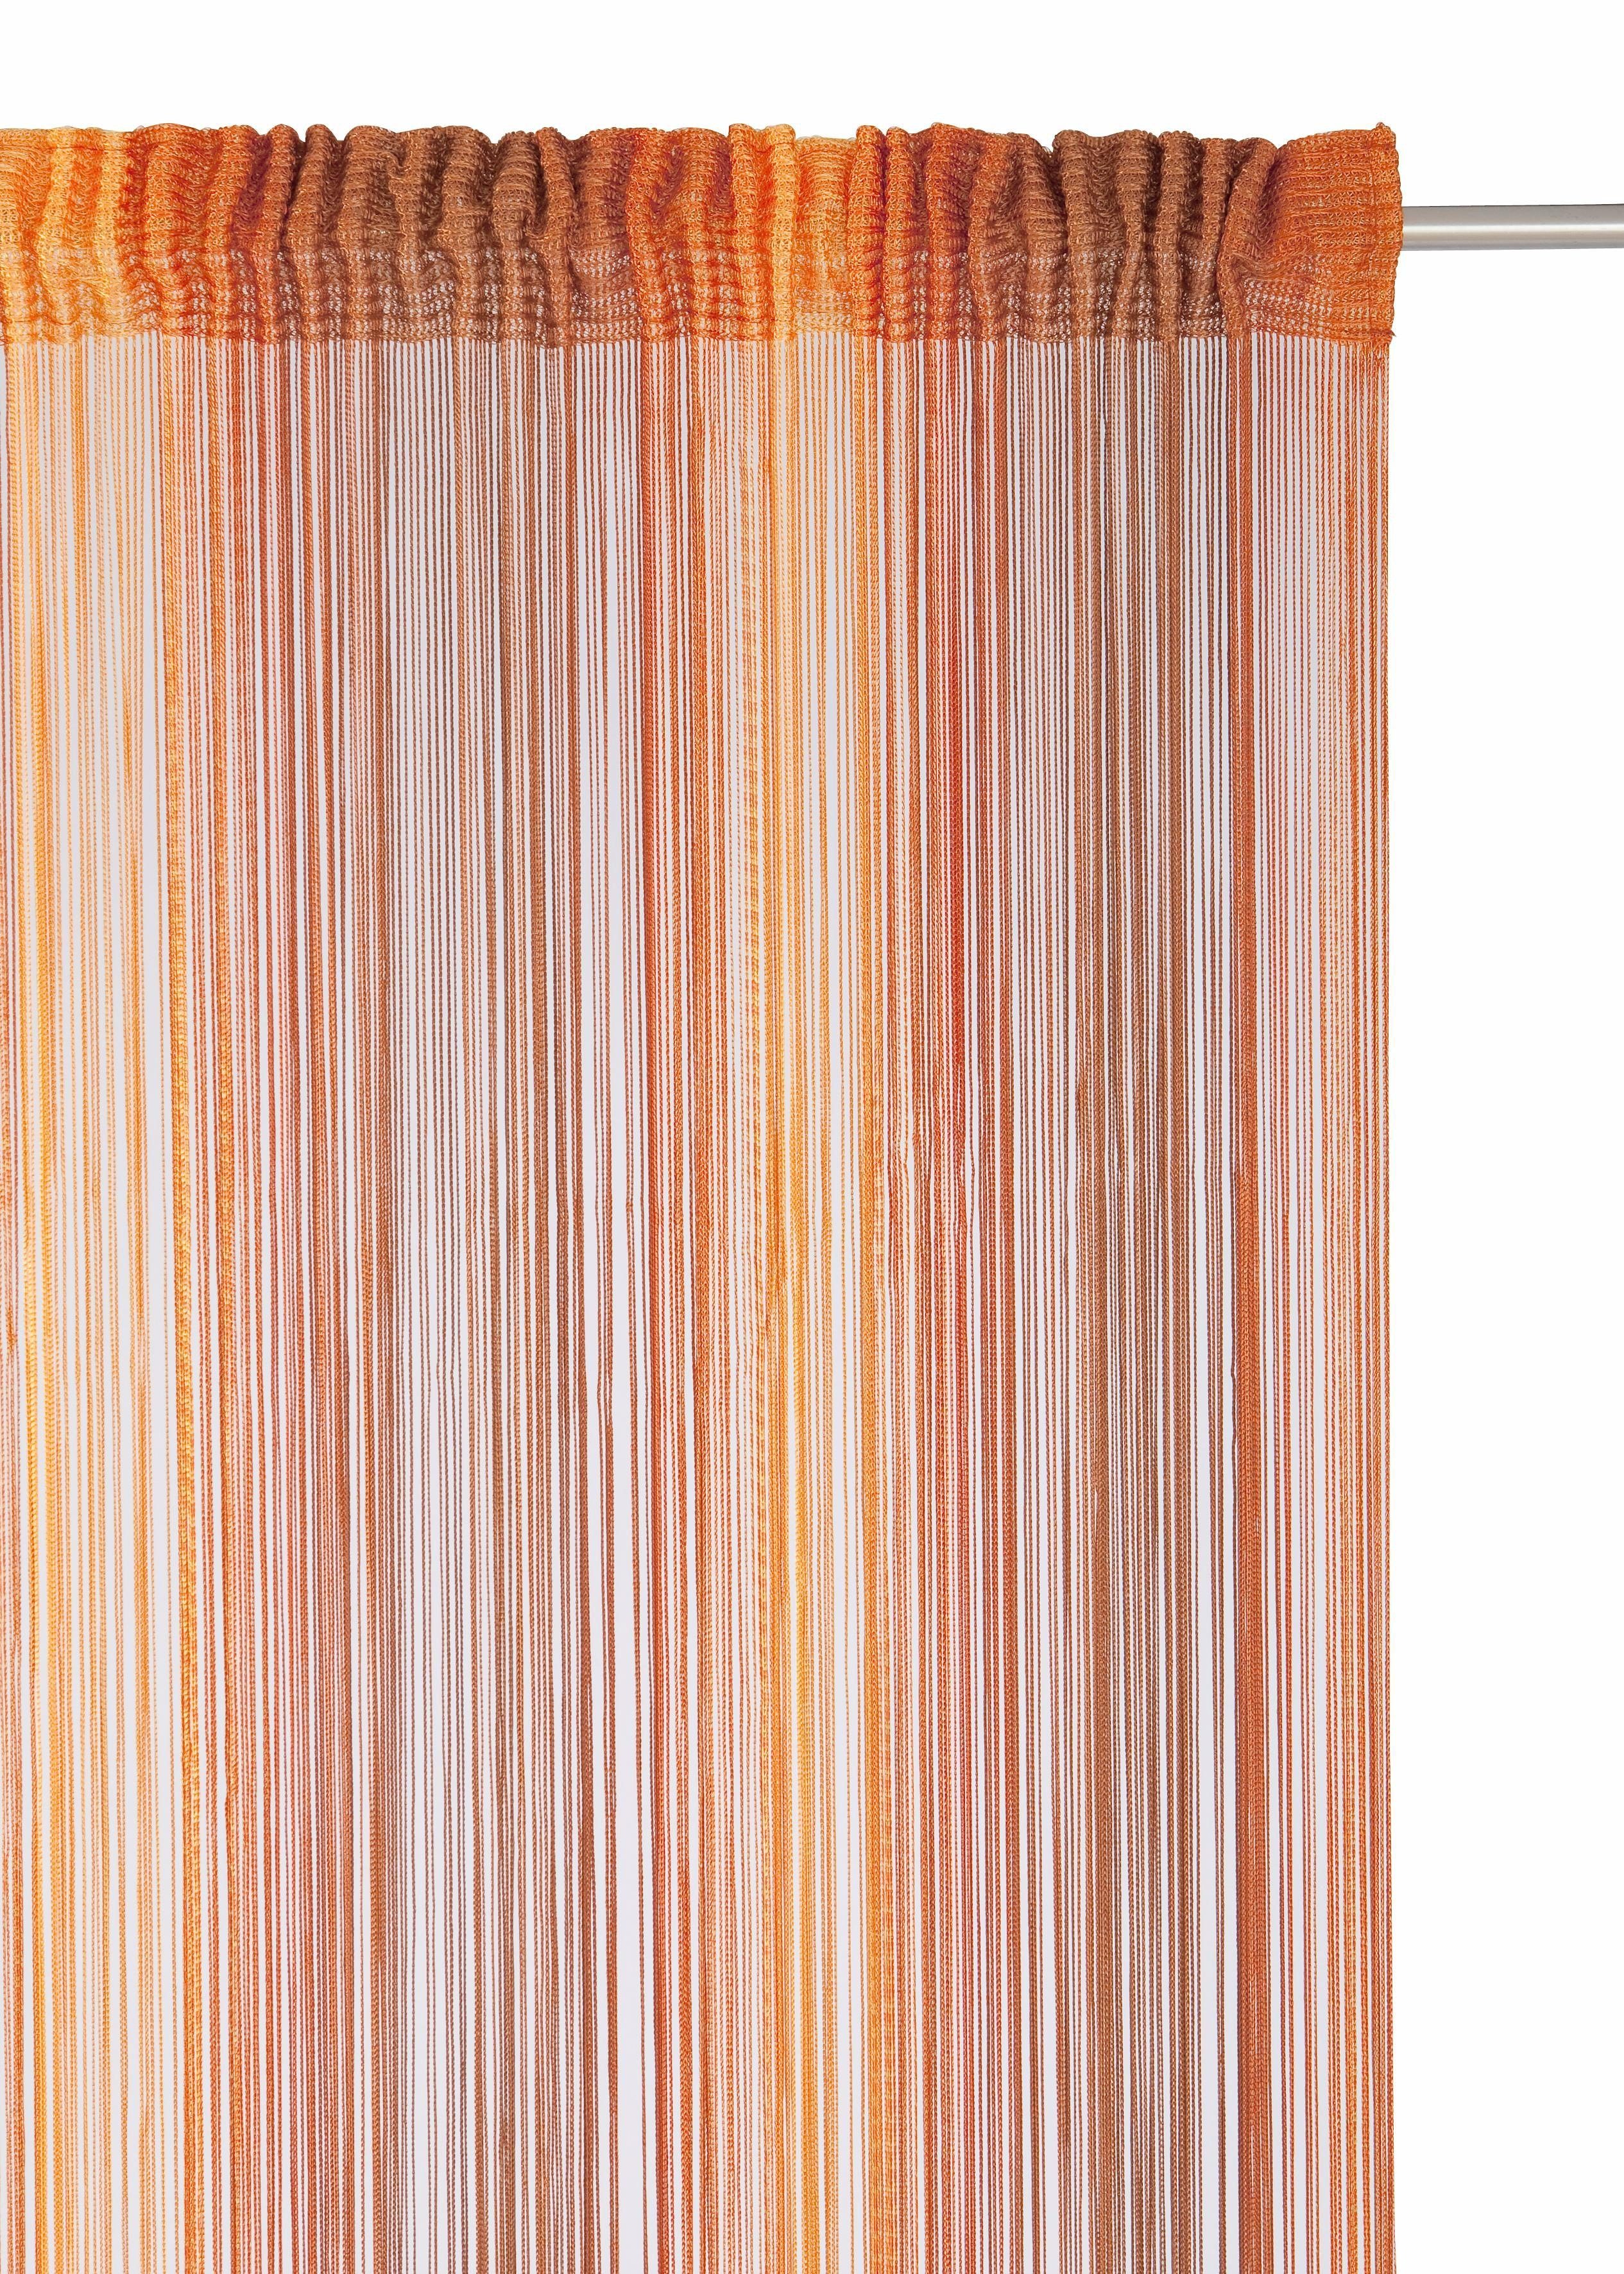 Fadenvorhang Rebecca, Weckbrodt, Multifunktionsband (1 Insektenschutz, Fadengardine, orange/terra Gardine, St), halbtransparent, transparent, kürzbar